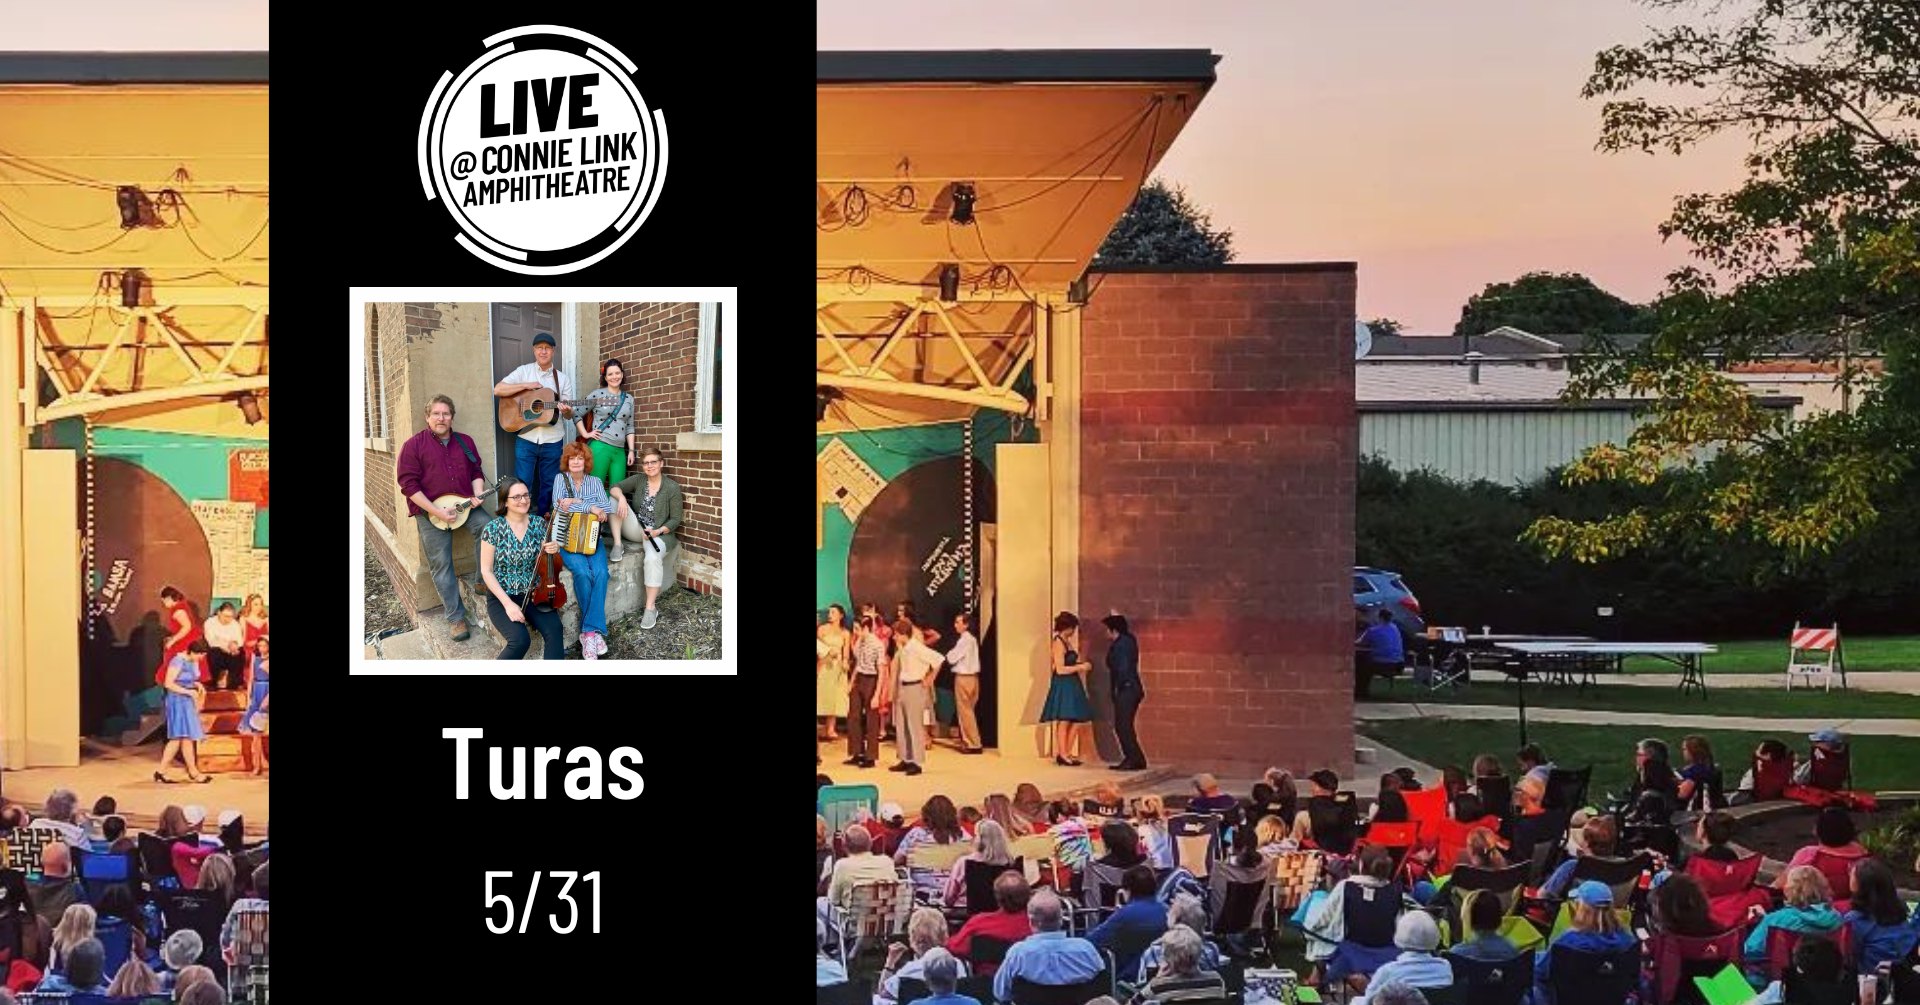 Normal LIVE presents Turas @ Connie Link Amphitheatre